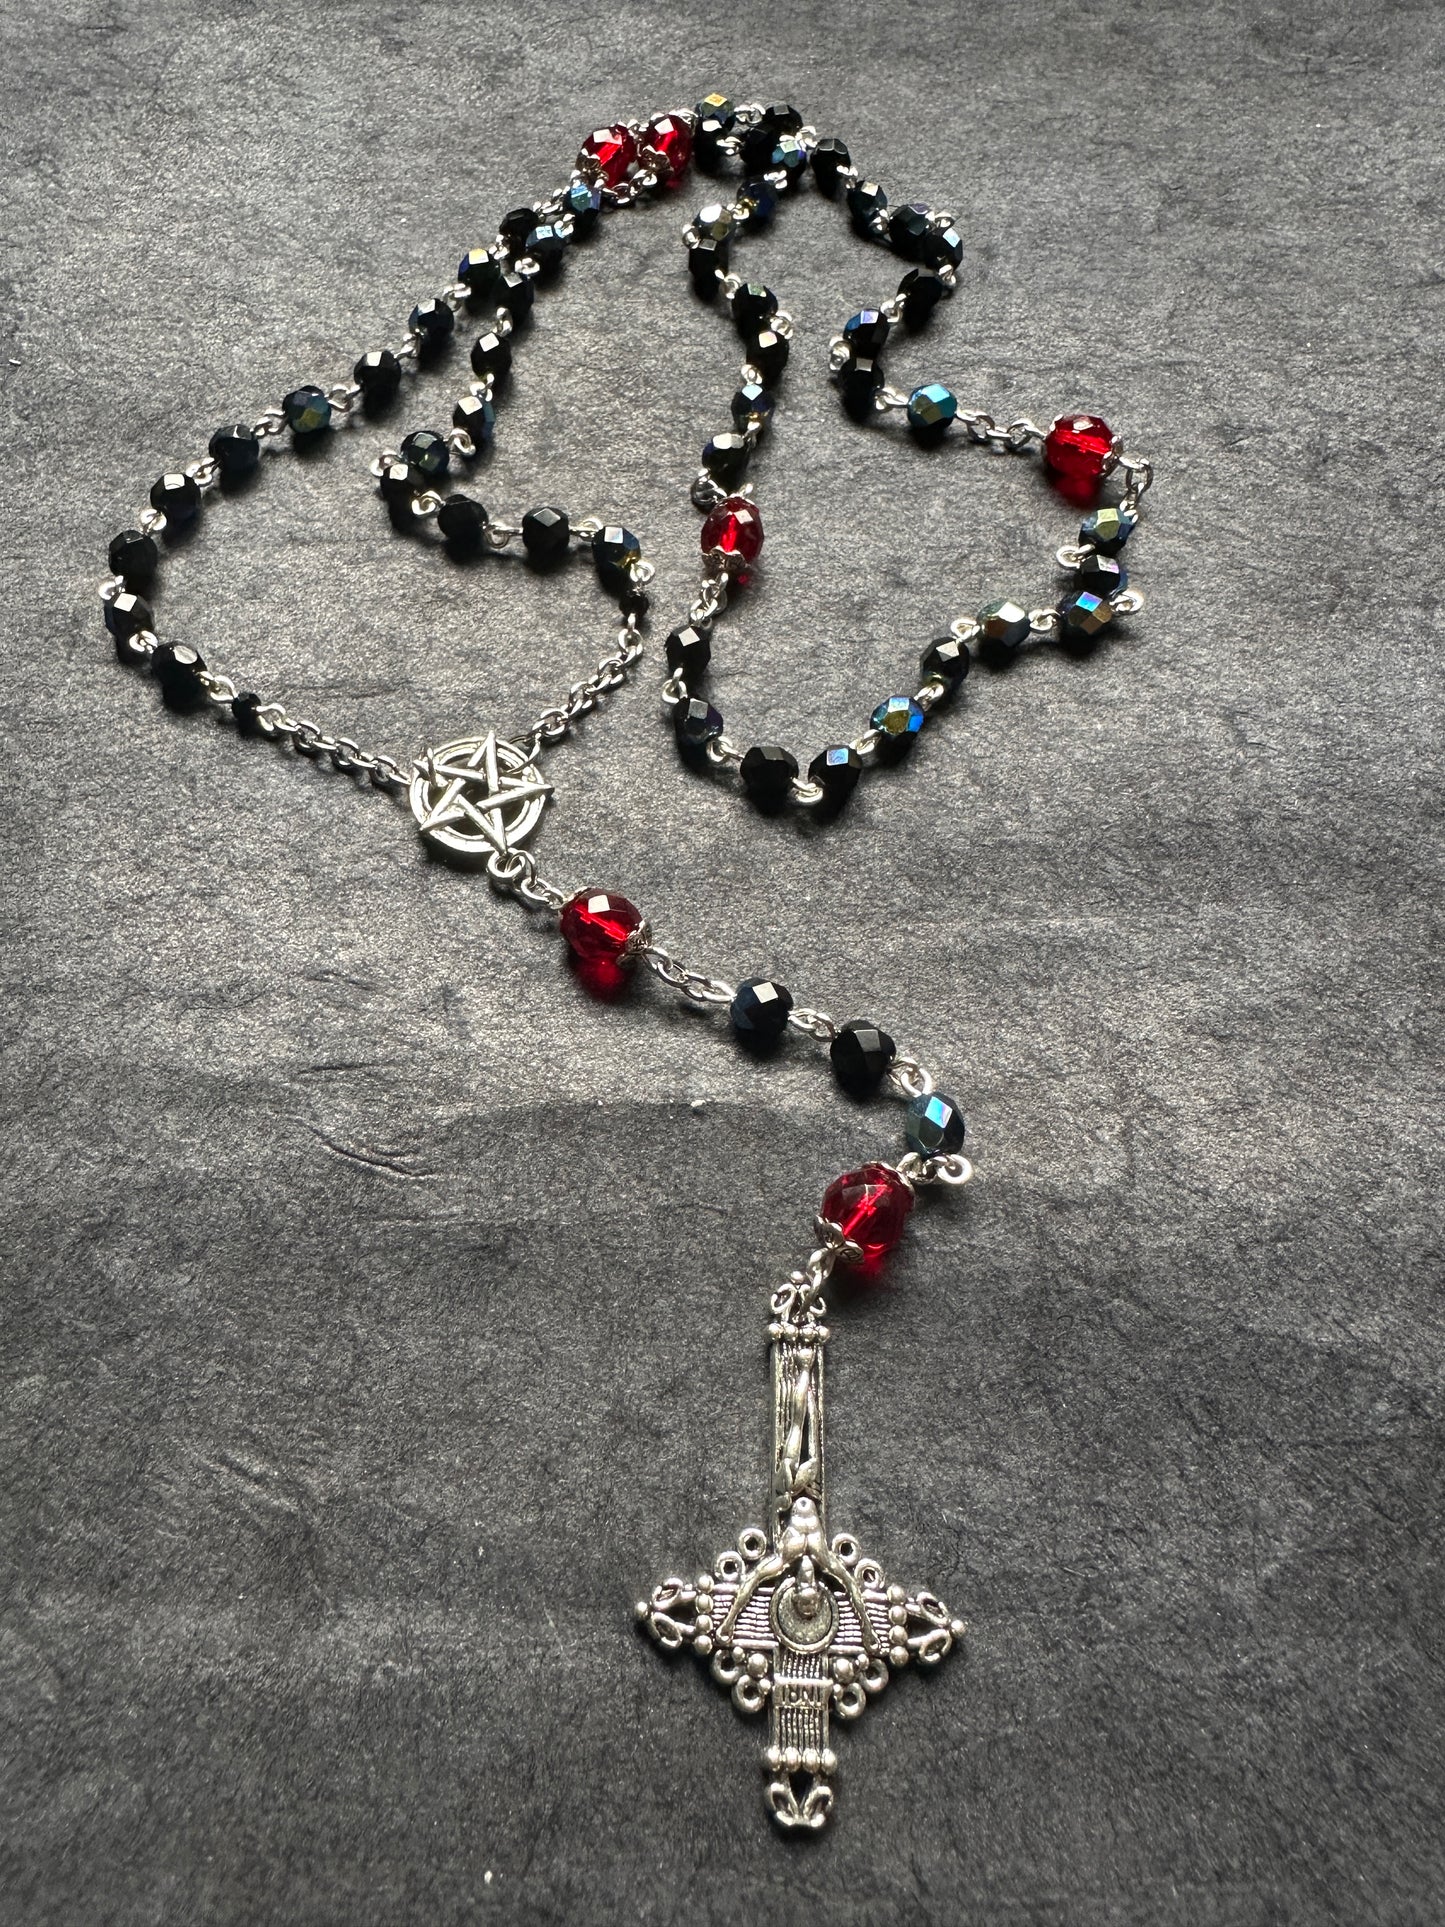 Black iridescent glass bead satanic rosary